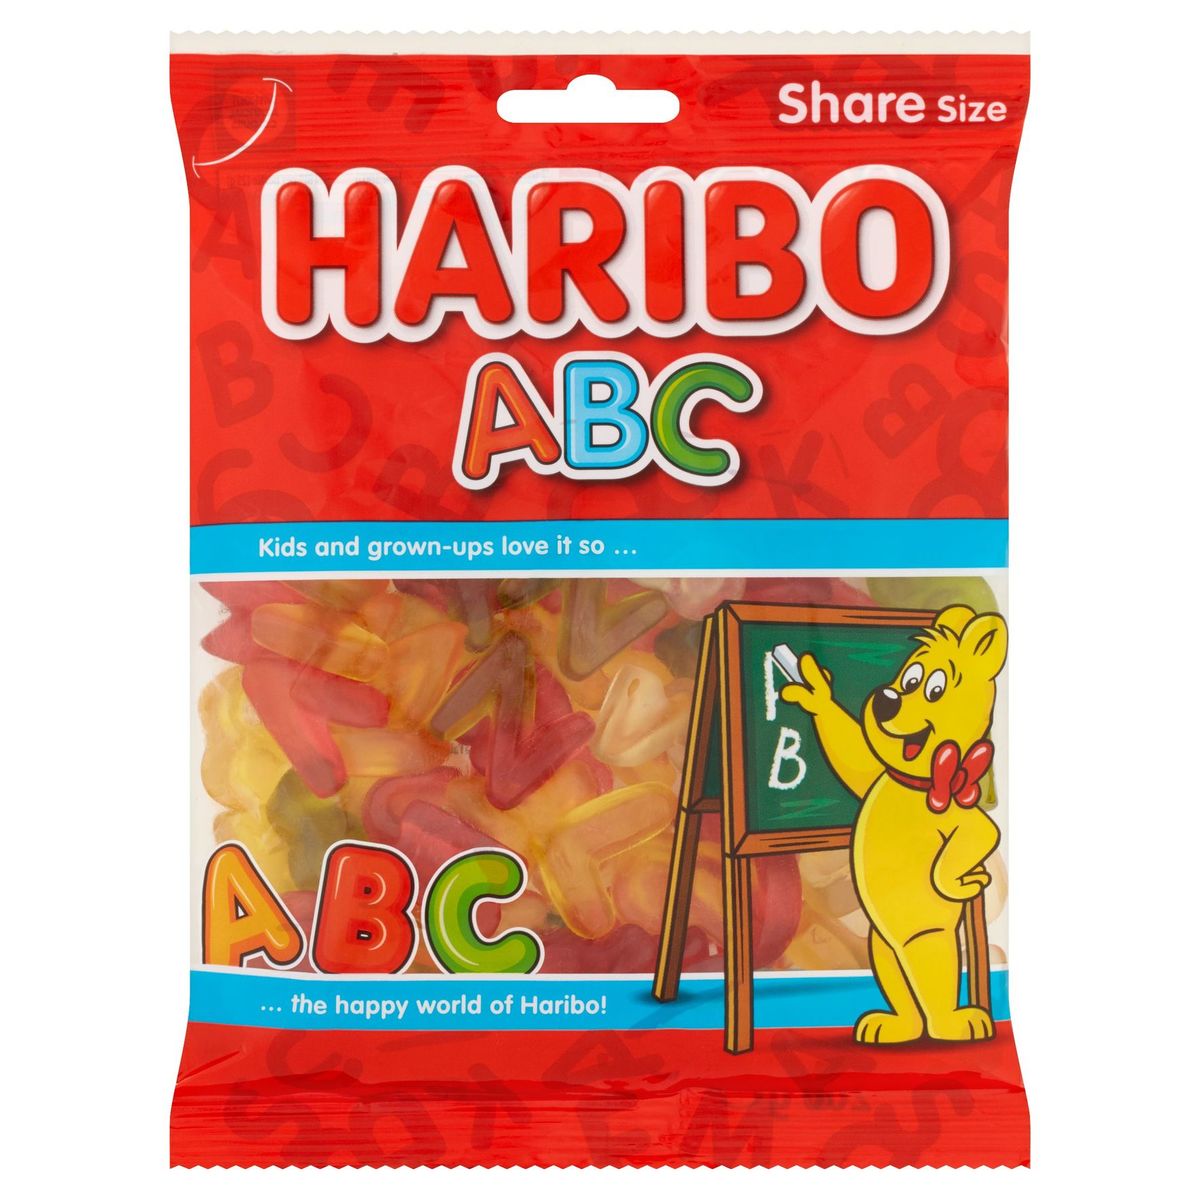 Haribo ABC Share Size 200 g